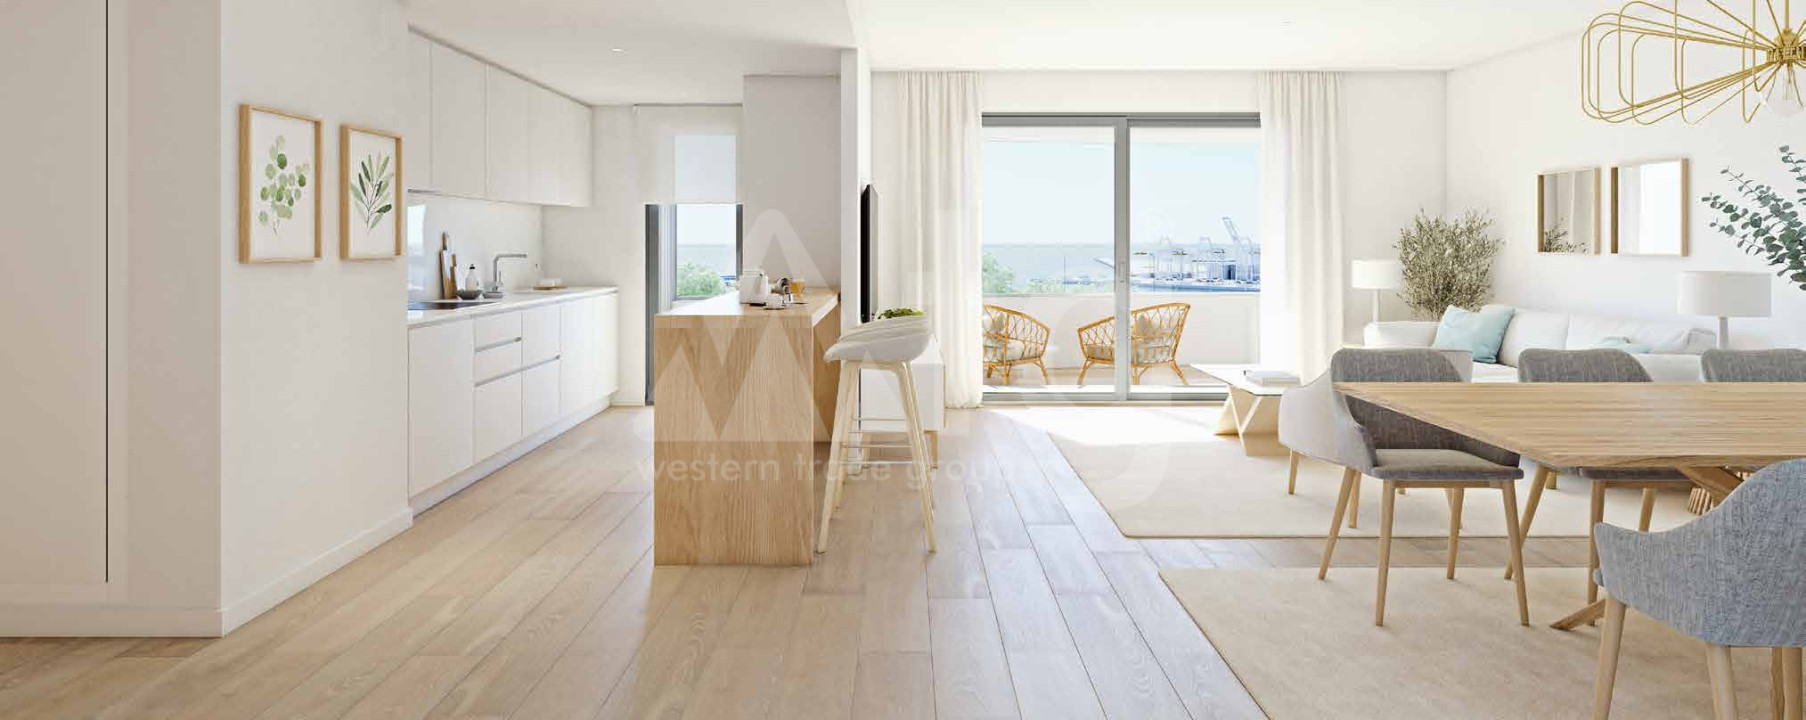 1 bedroom Apartment in Alicante - AEH25898 - 3